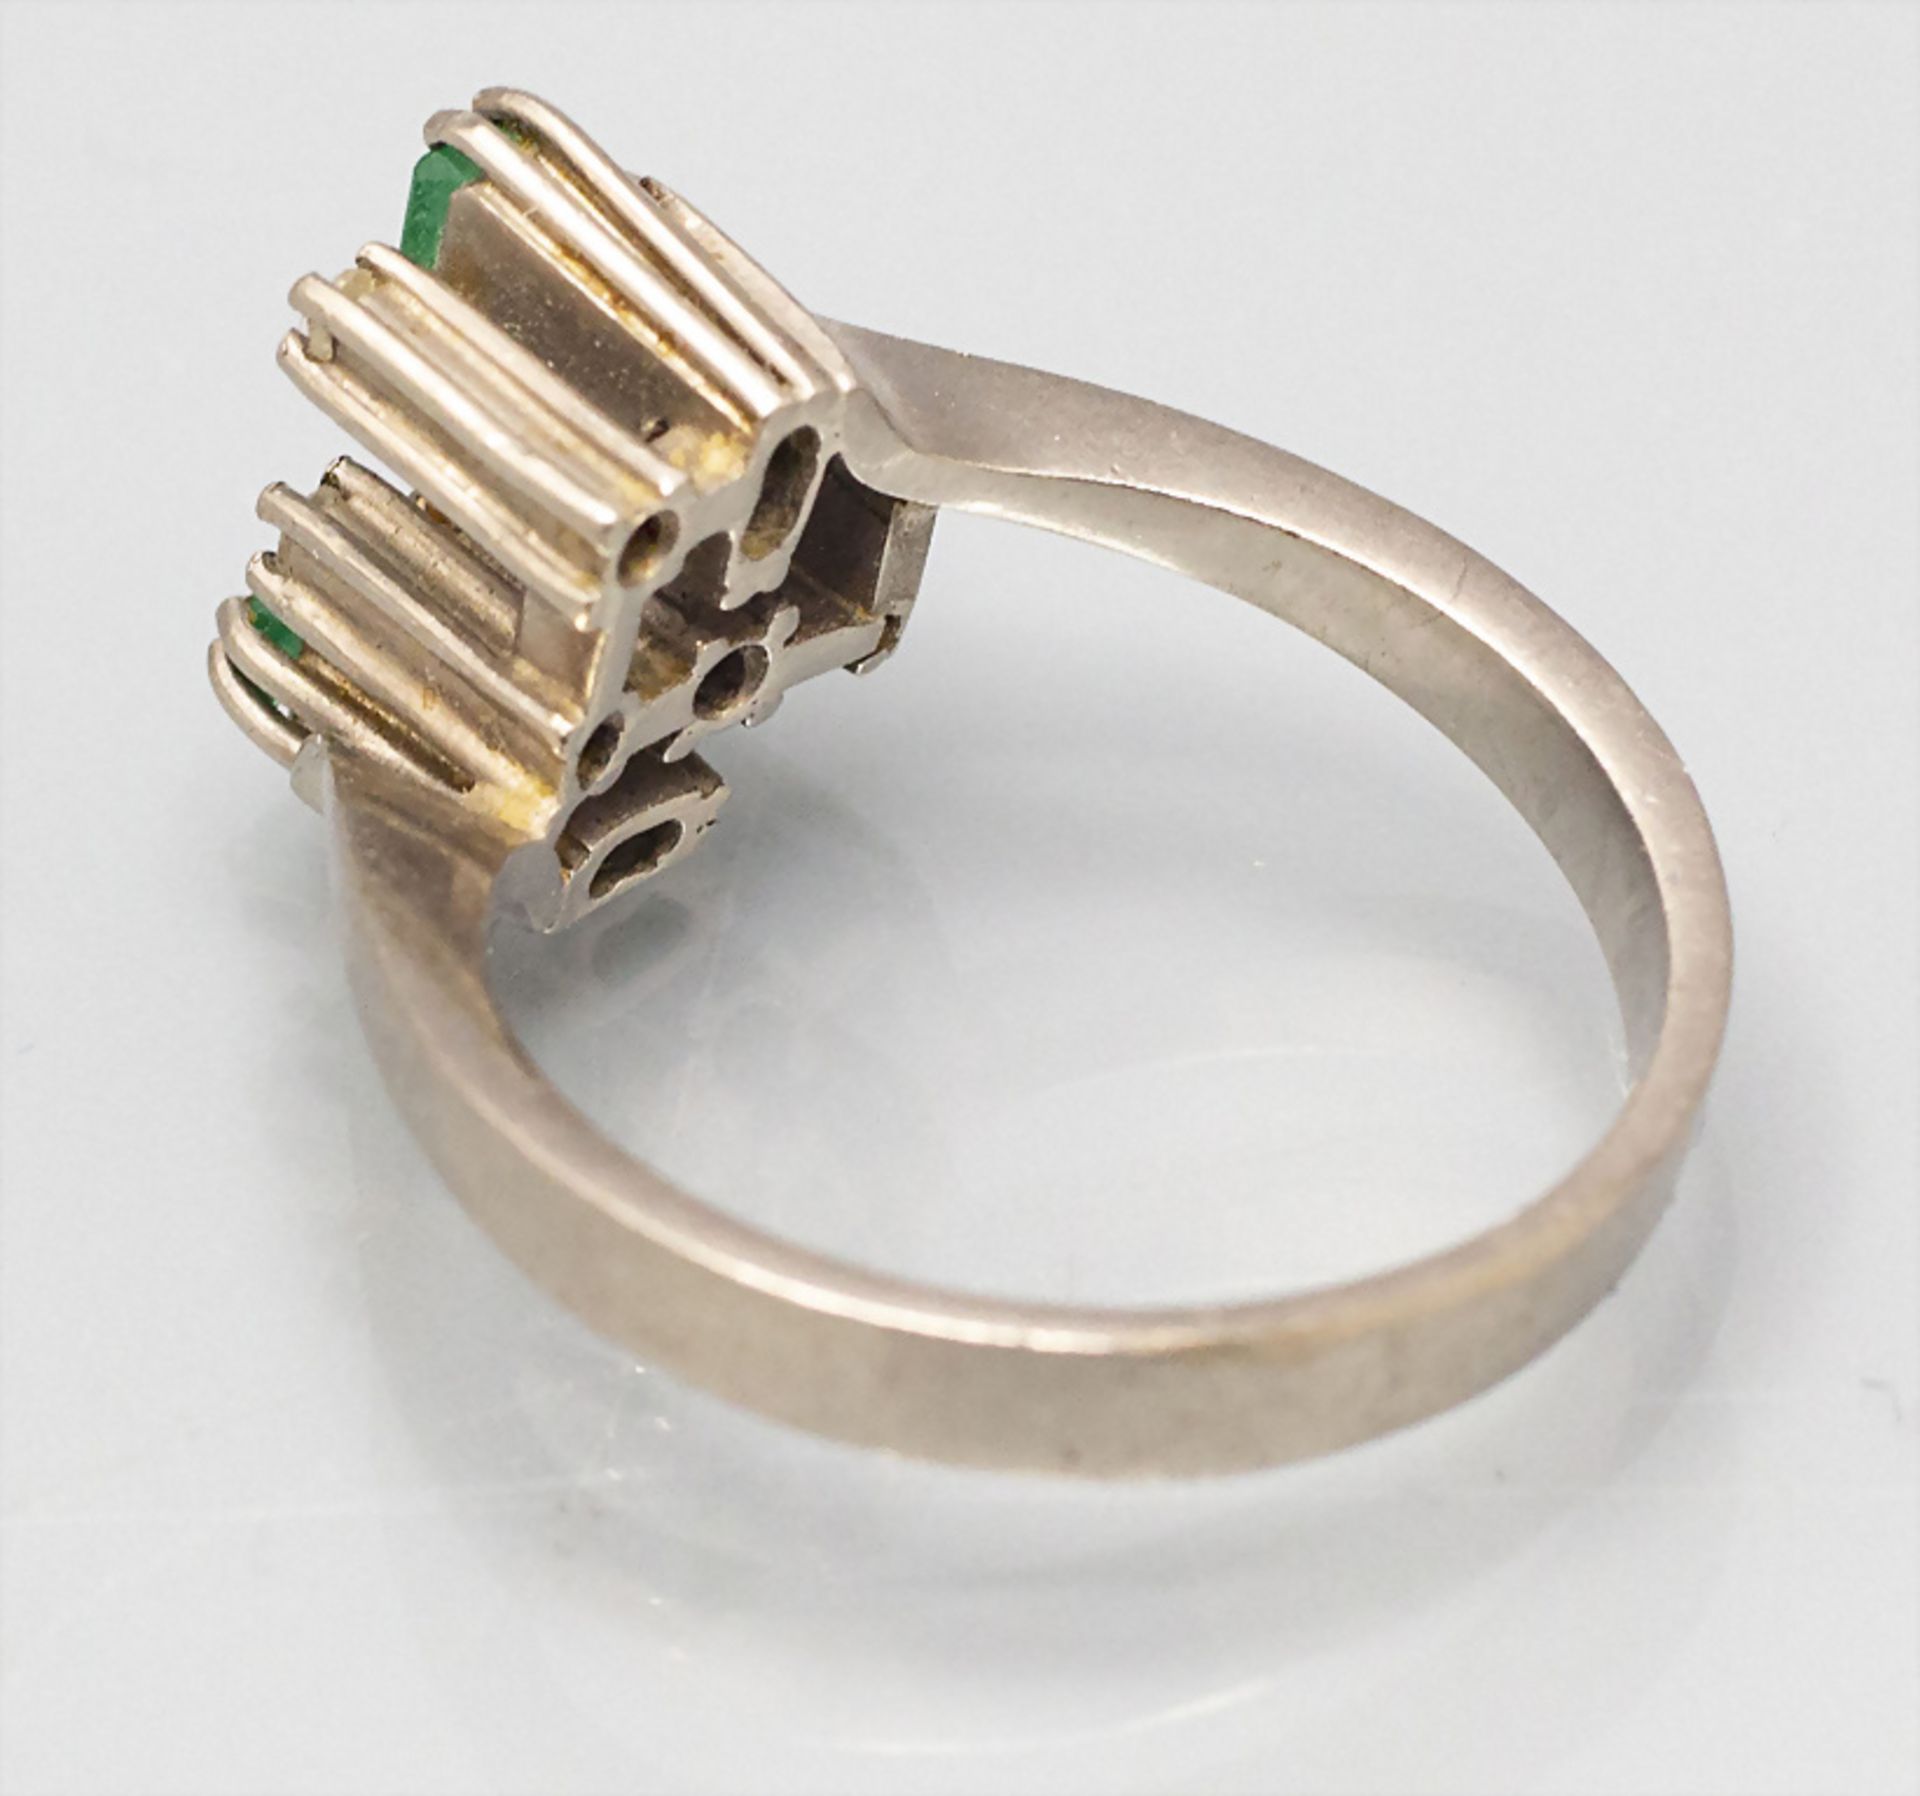 Damenring mit Diamanten und Smaragden / A ladies 18 ct gold ring with diamonds and emeralds - Image 2 of 2